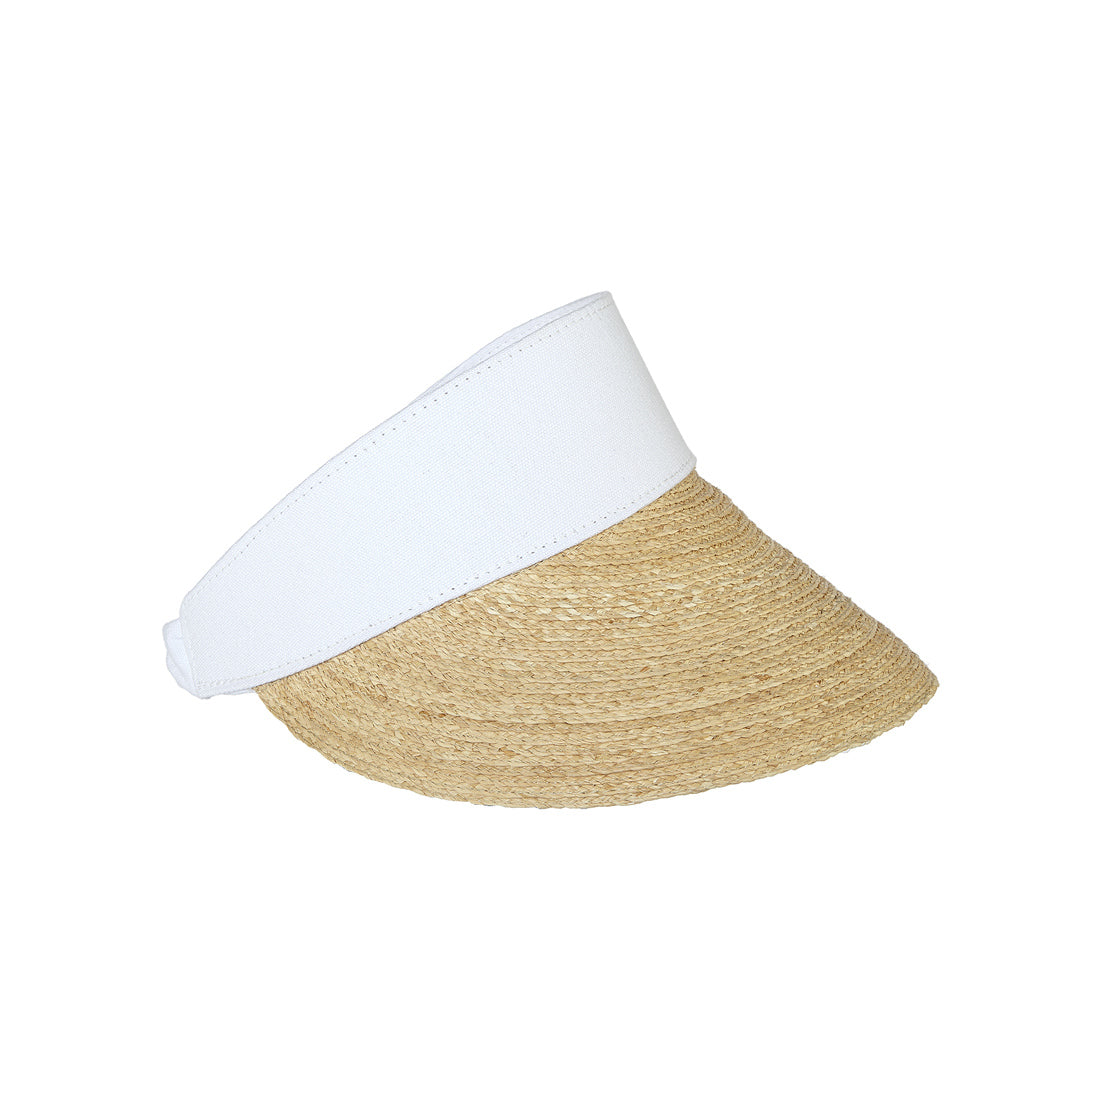 Tawny Hat - Premium hat from Marina St Barth - Just $120.00! Shop now at Marina St Barth